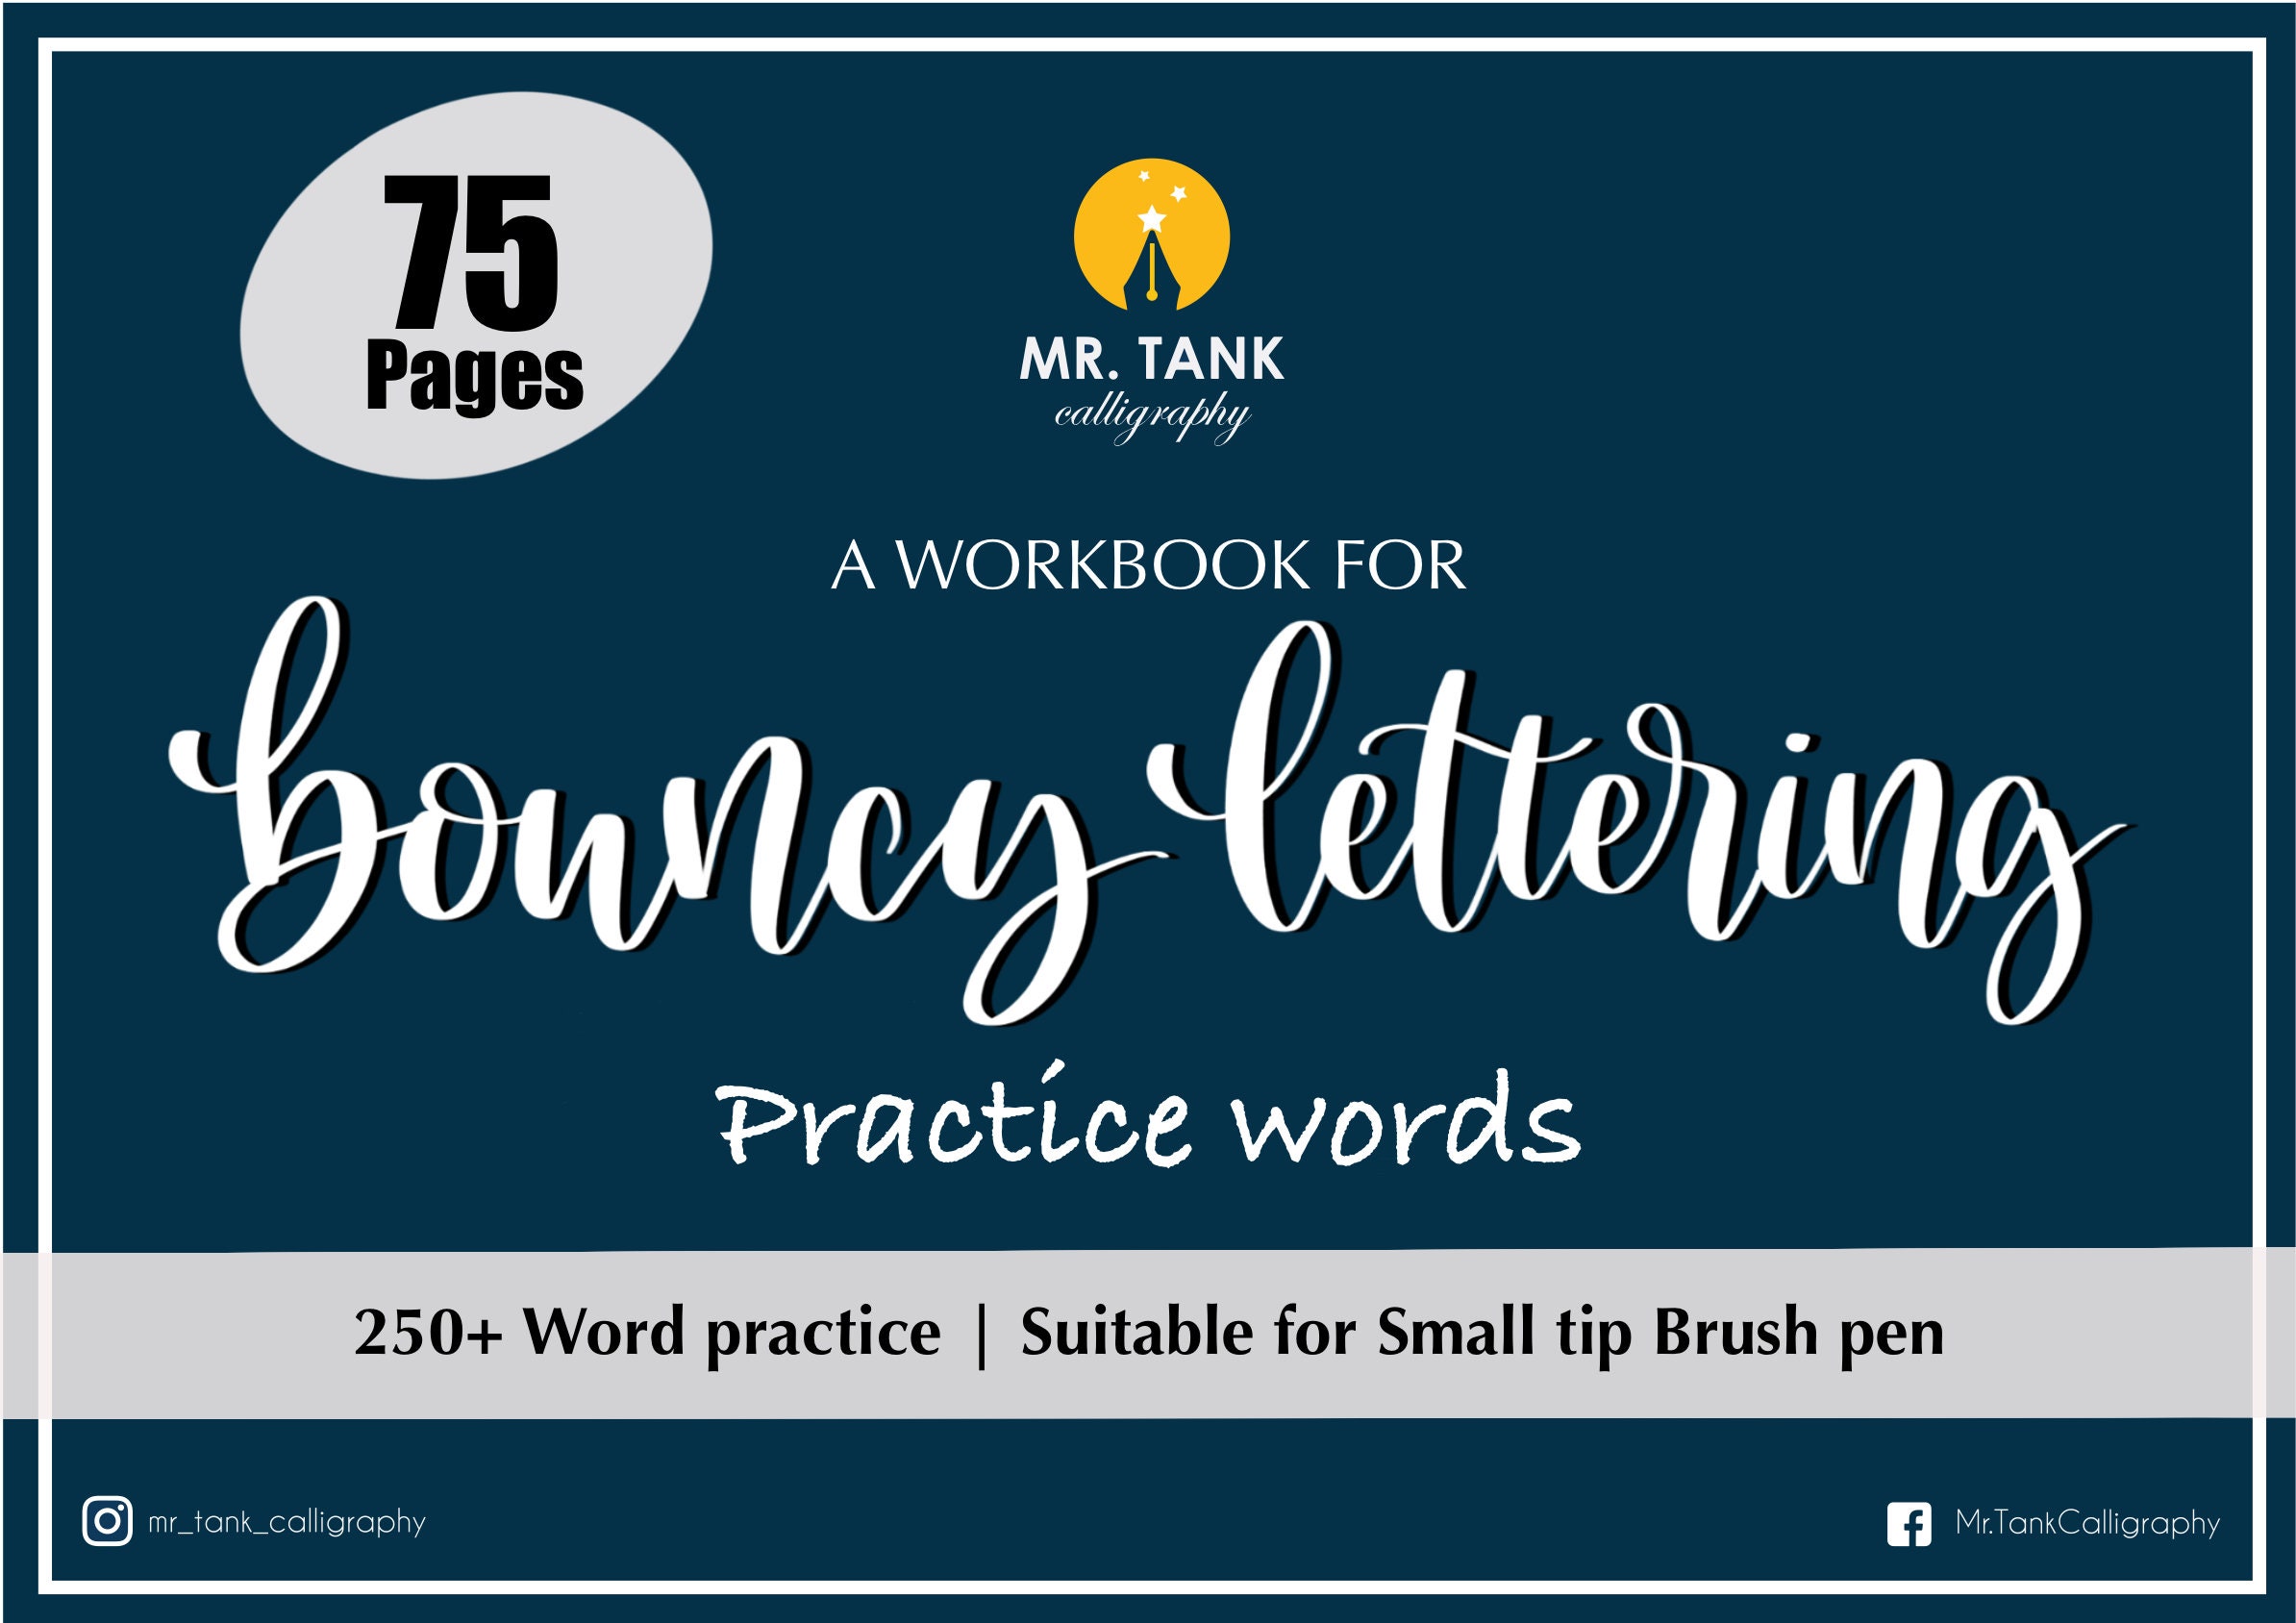 Learn to Letter Workbook // Lettering Worksheets // Digital Hand